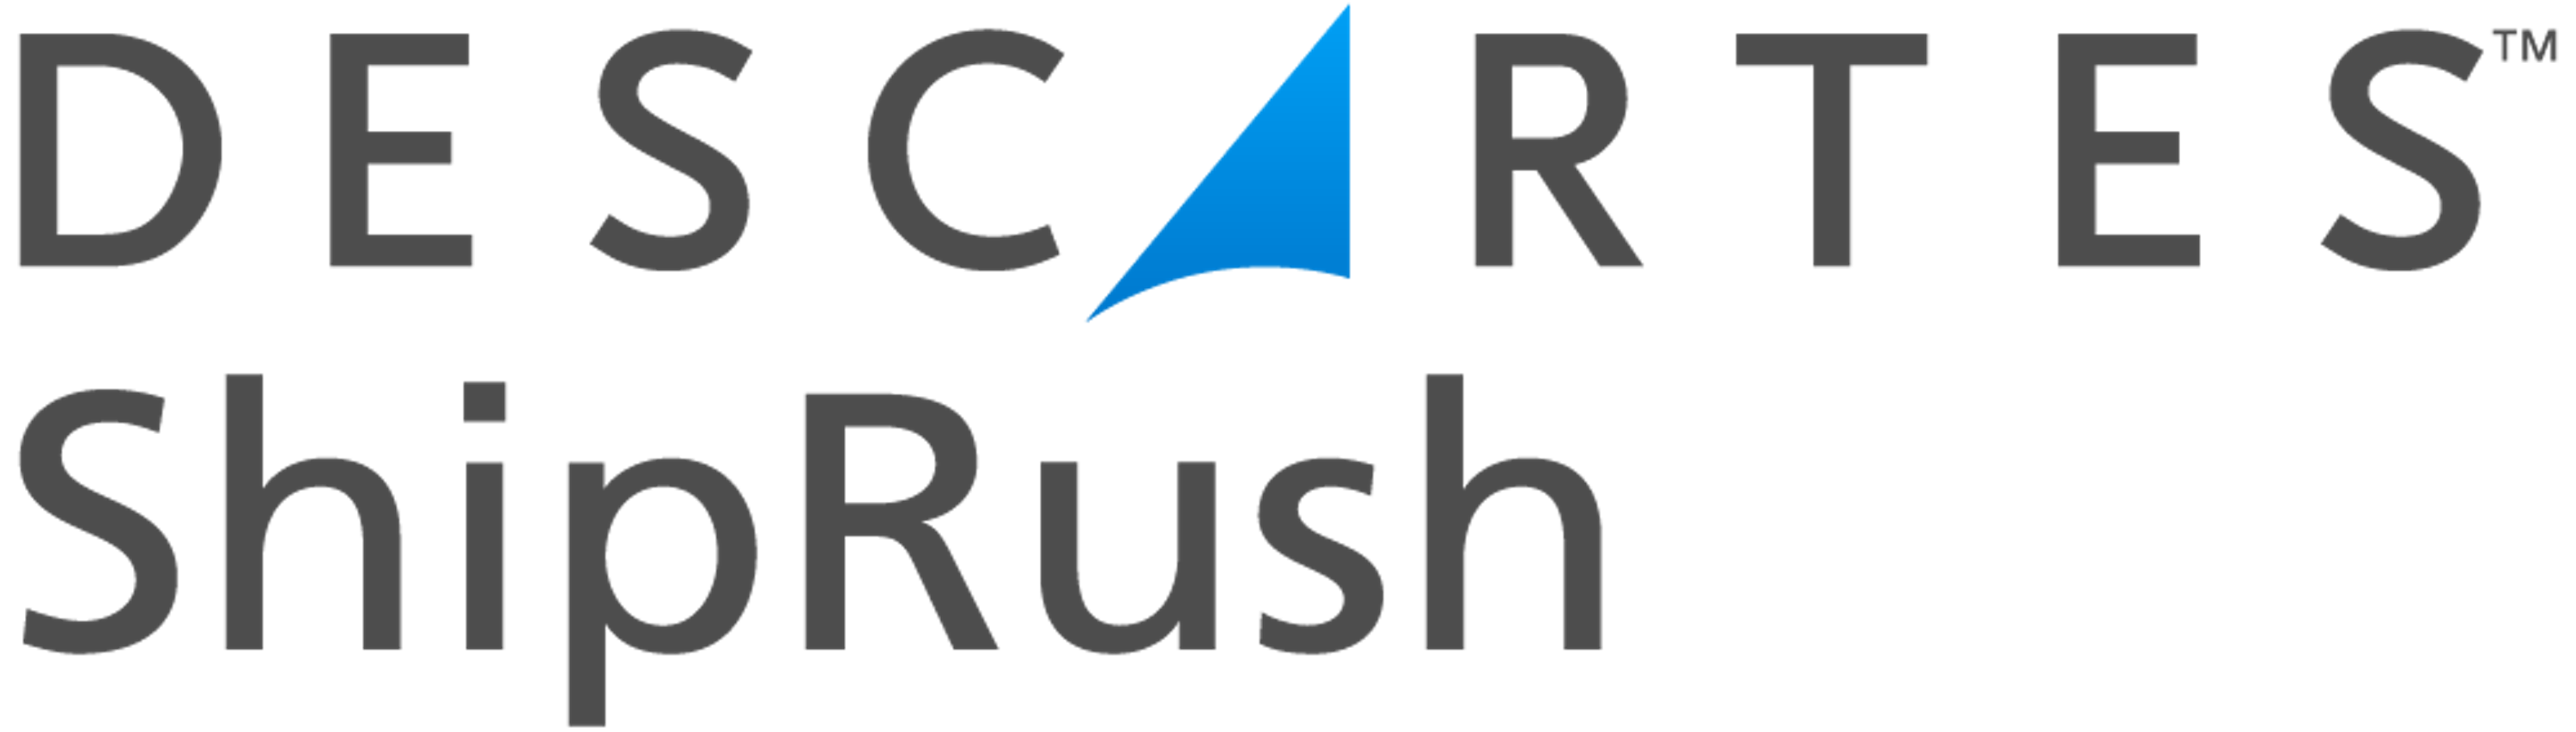 ShipRush Logo